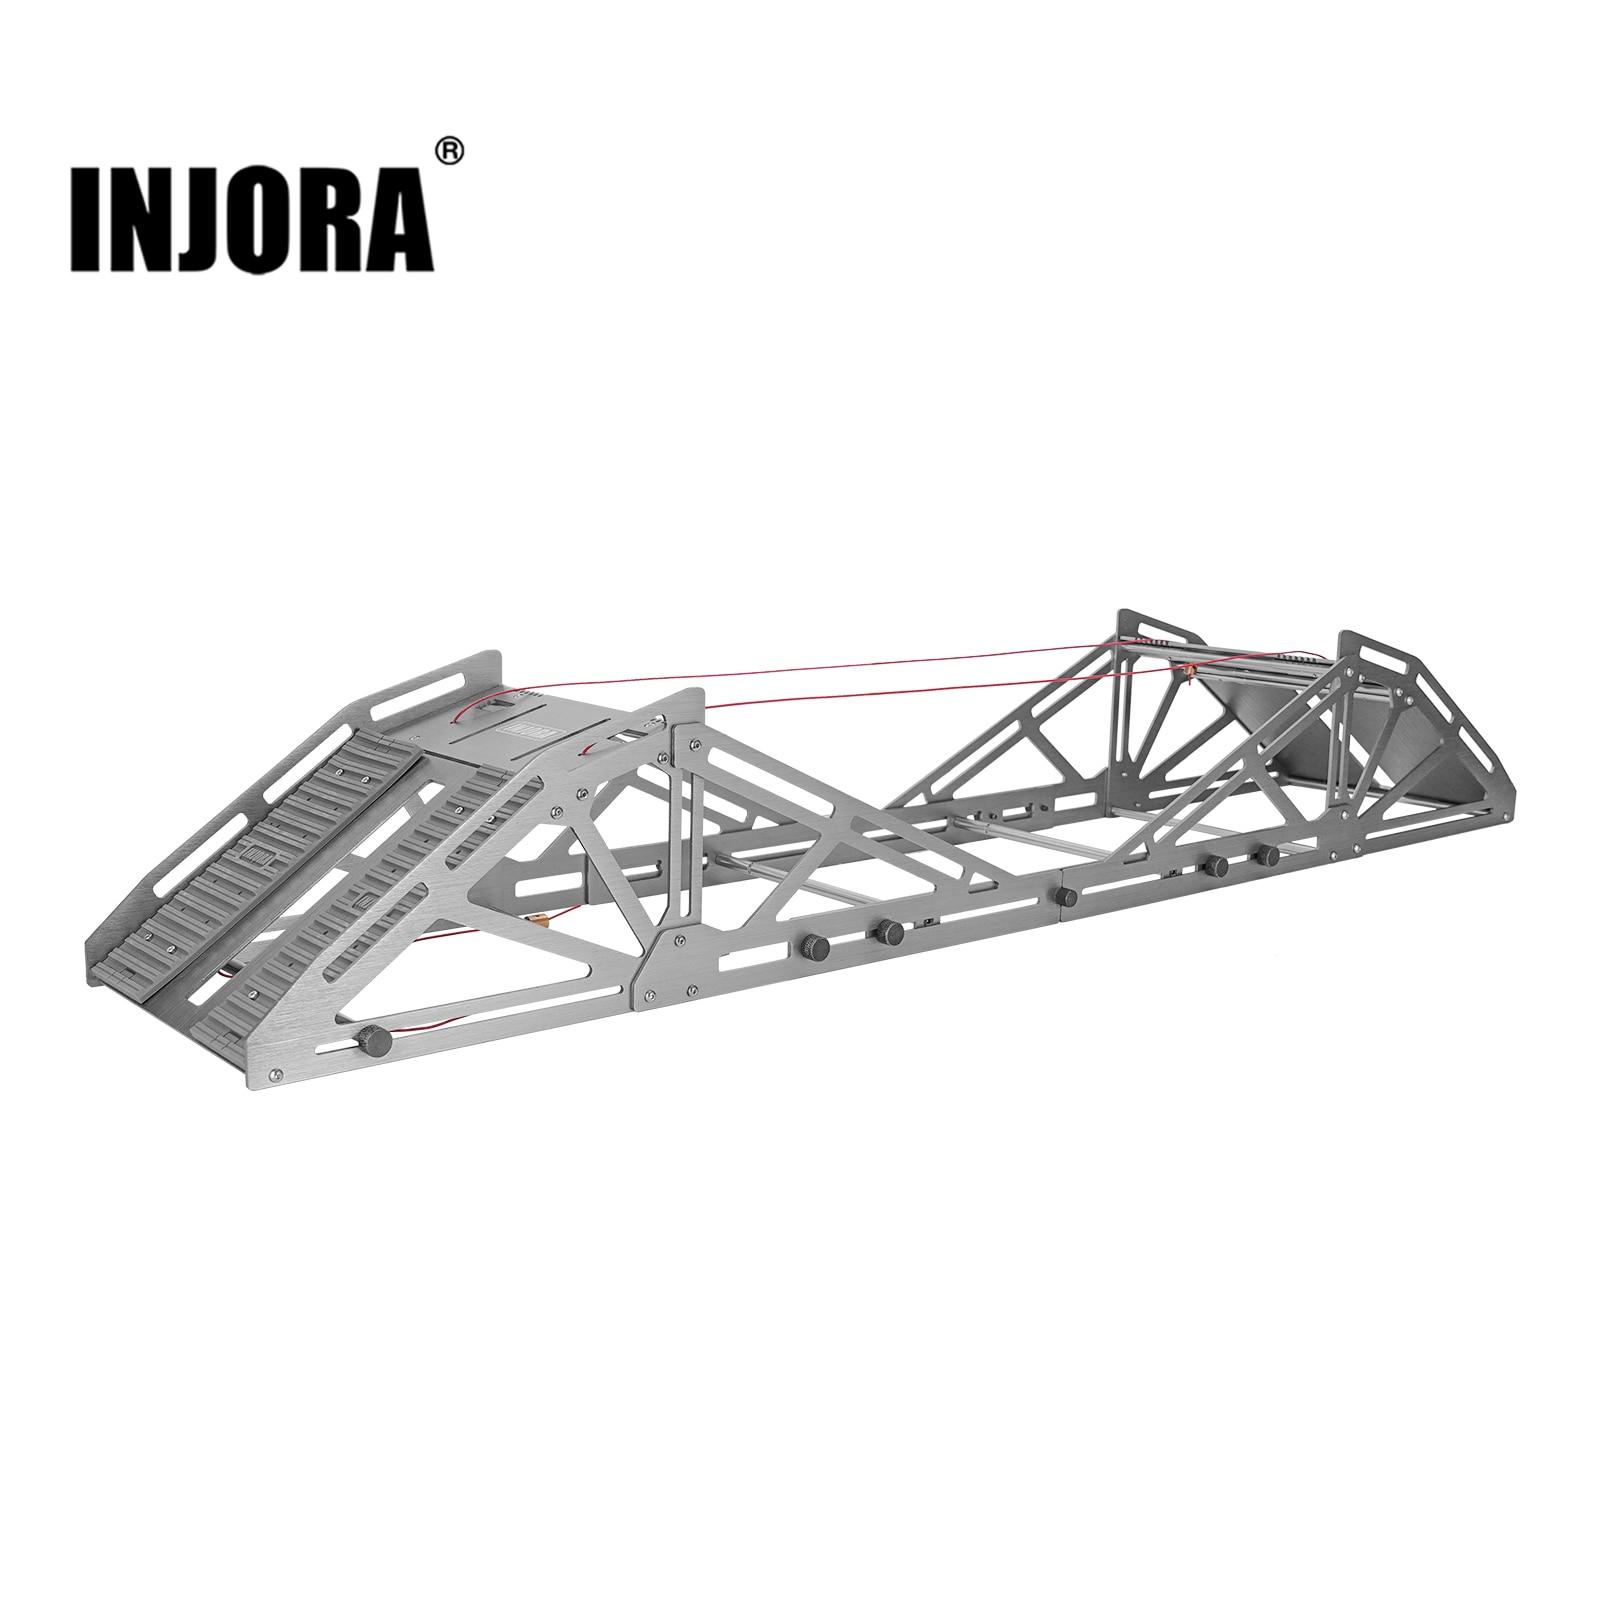 INJORA-Rope-Bridge-Obstacle-Kit-for-1-18-1-24-RC-Crawer-Car-SCX24-AX24-TRX4M.jpg